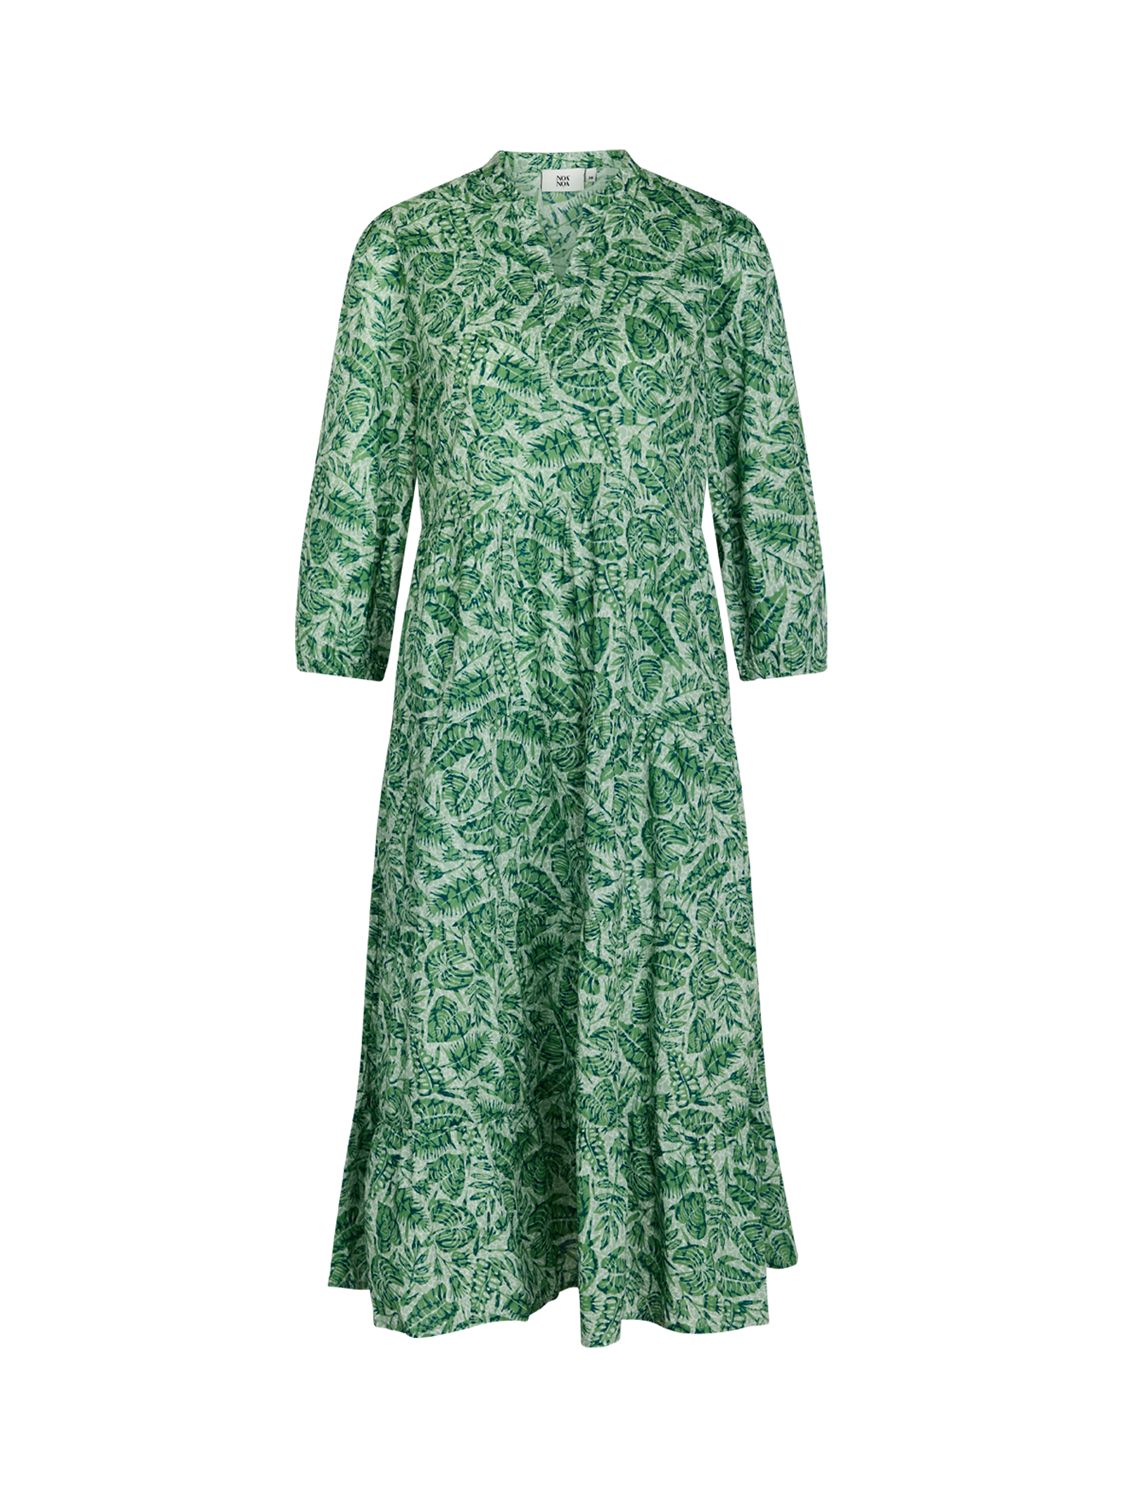 Noa Noa Annie Leaf Print Dress, Green at John Lewis & Partners